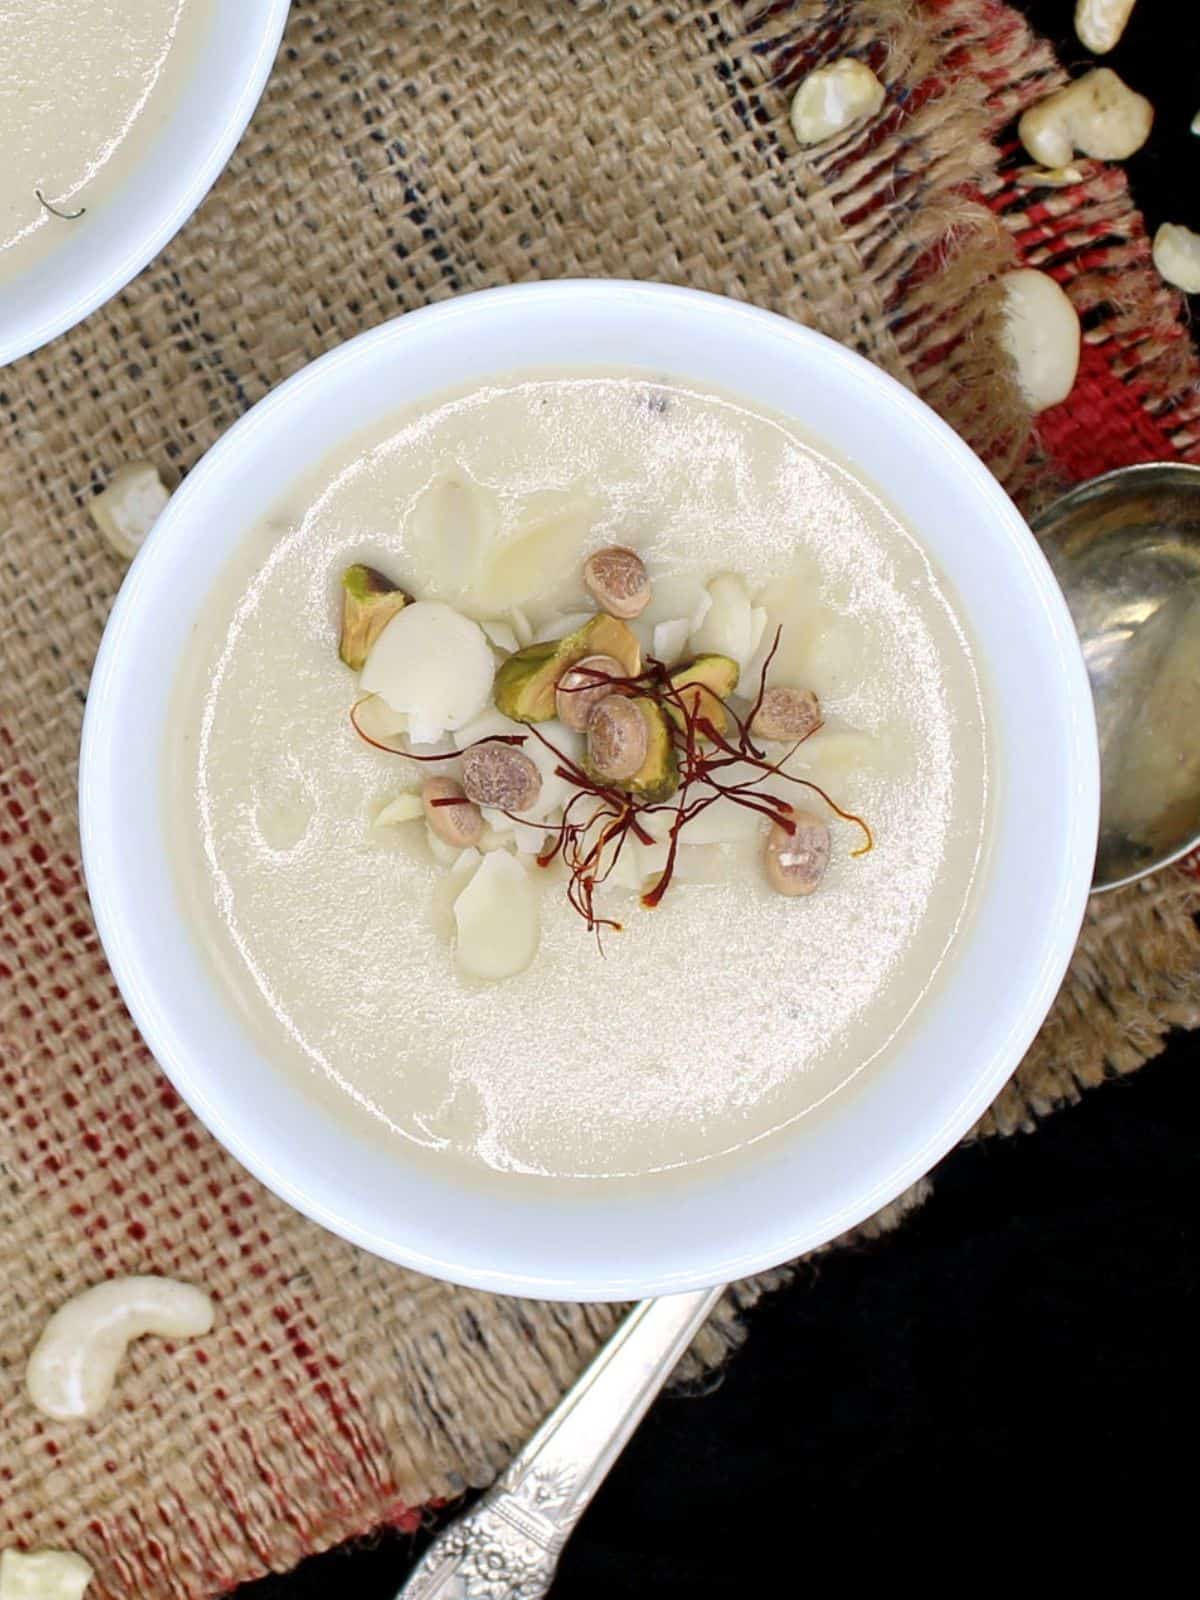 Vegan rabri in bowl with nuts and saffron garnish with cashews strewn around.